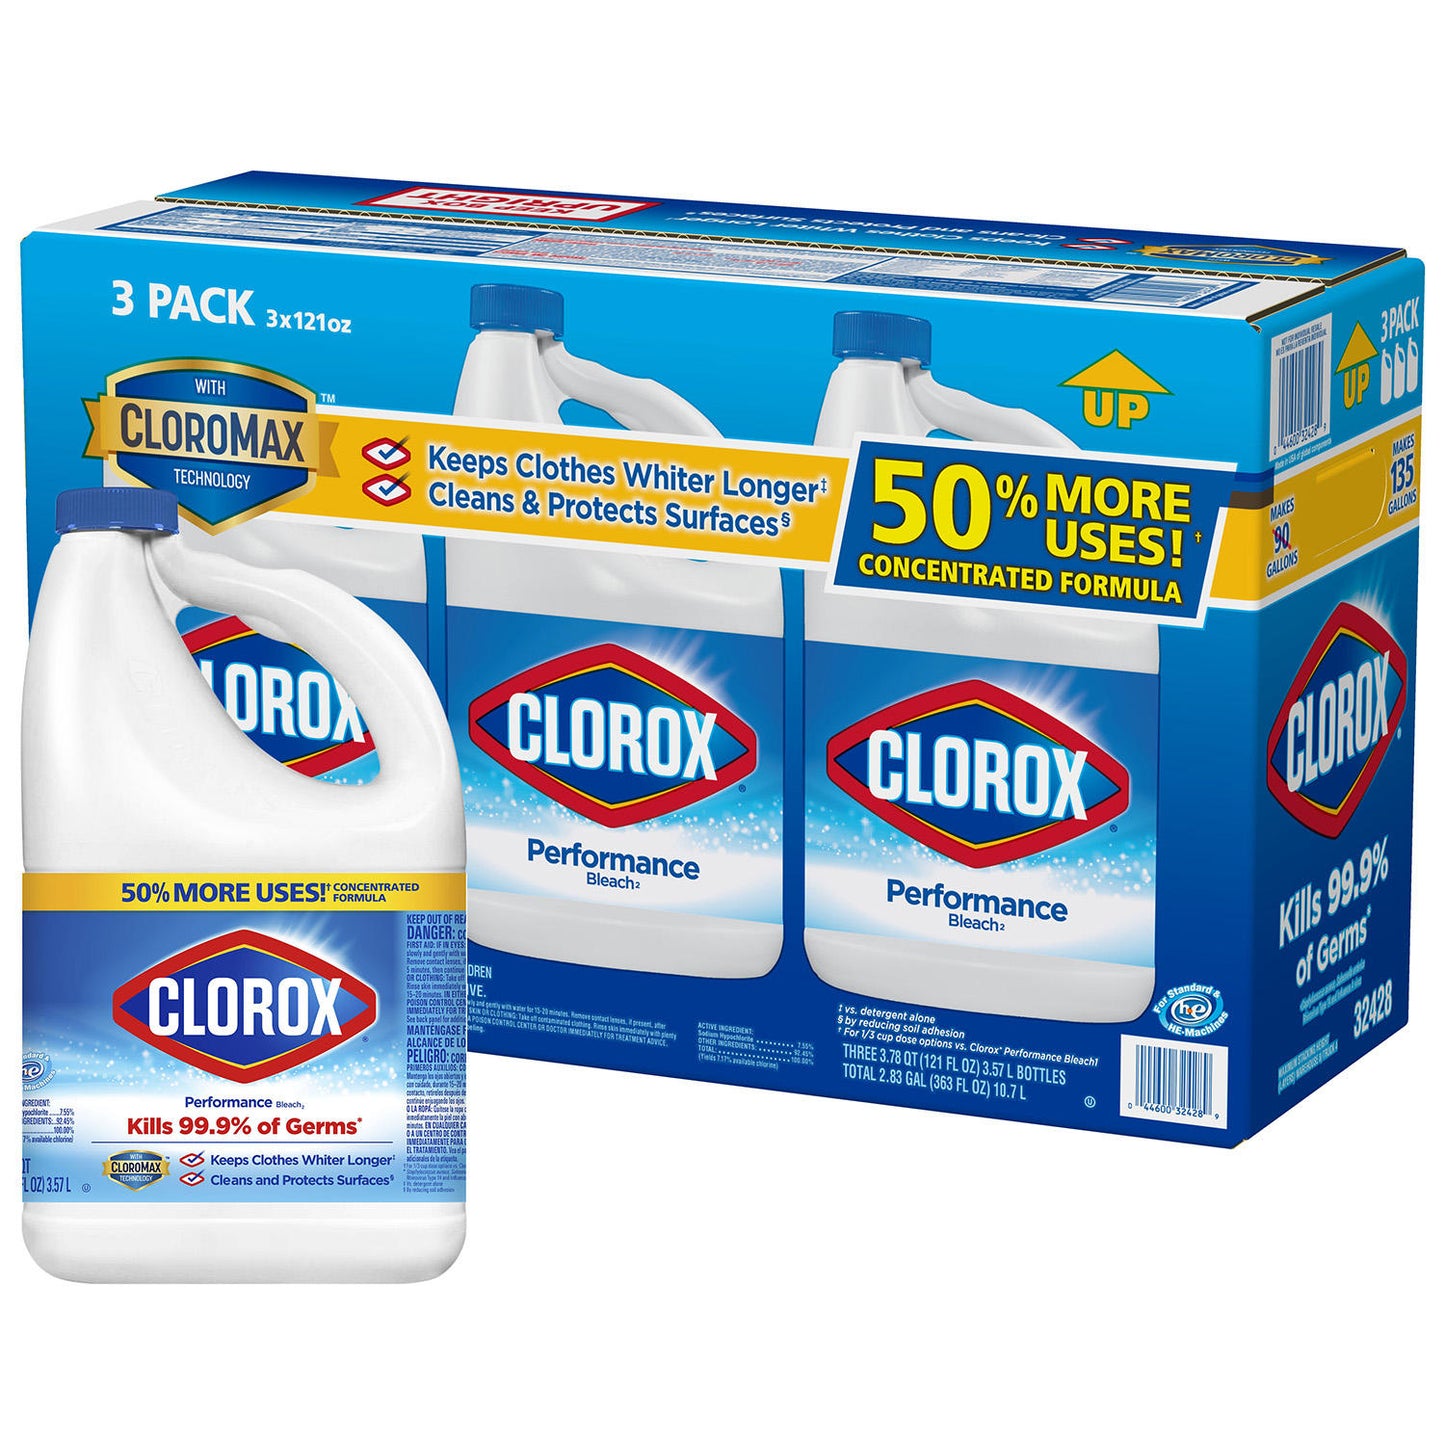 Clorox Performance Bleach, 121 oz. bottles (Pack of 3)